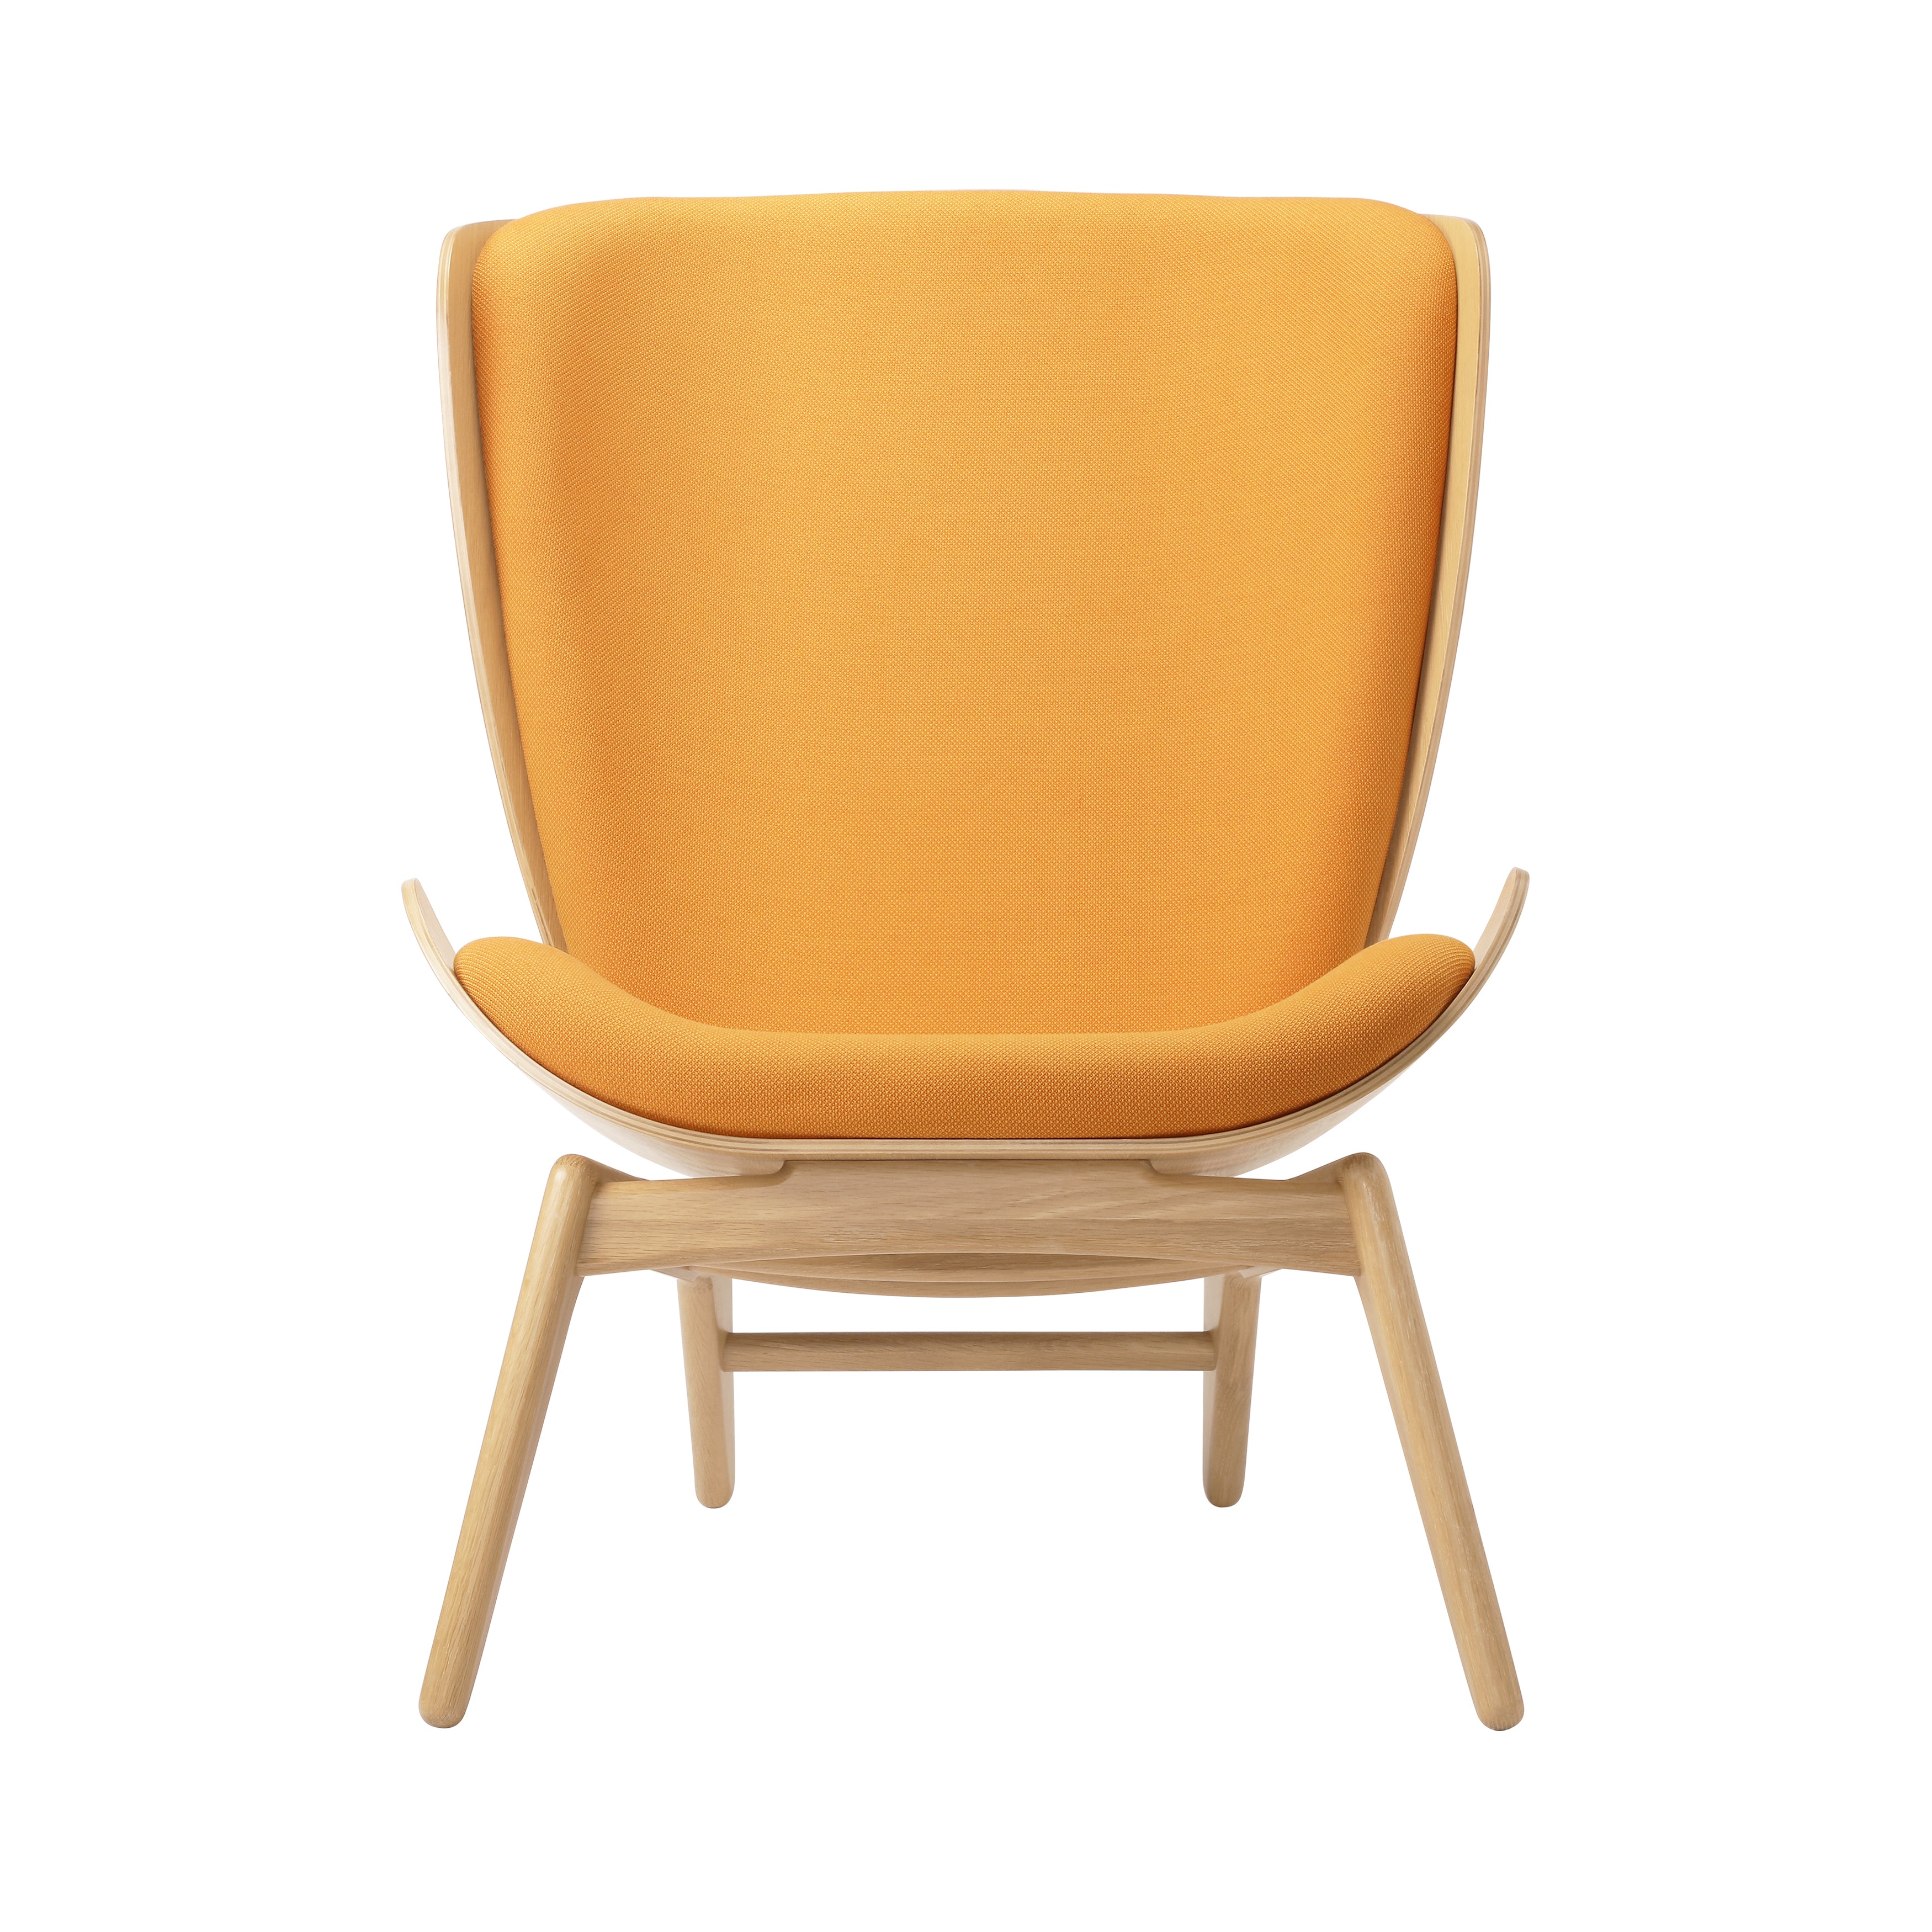 The Reader Wing chair: Oak + Tangerine